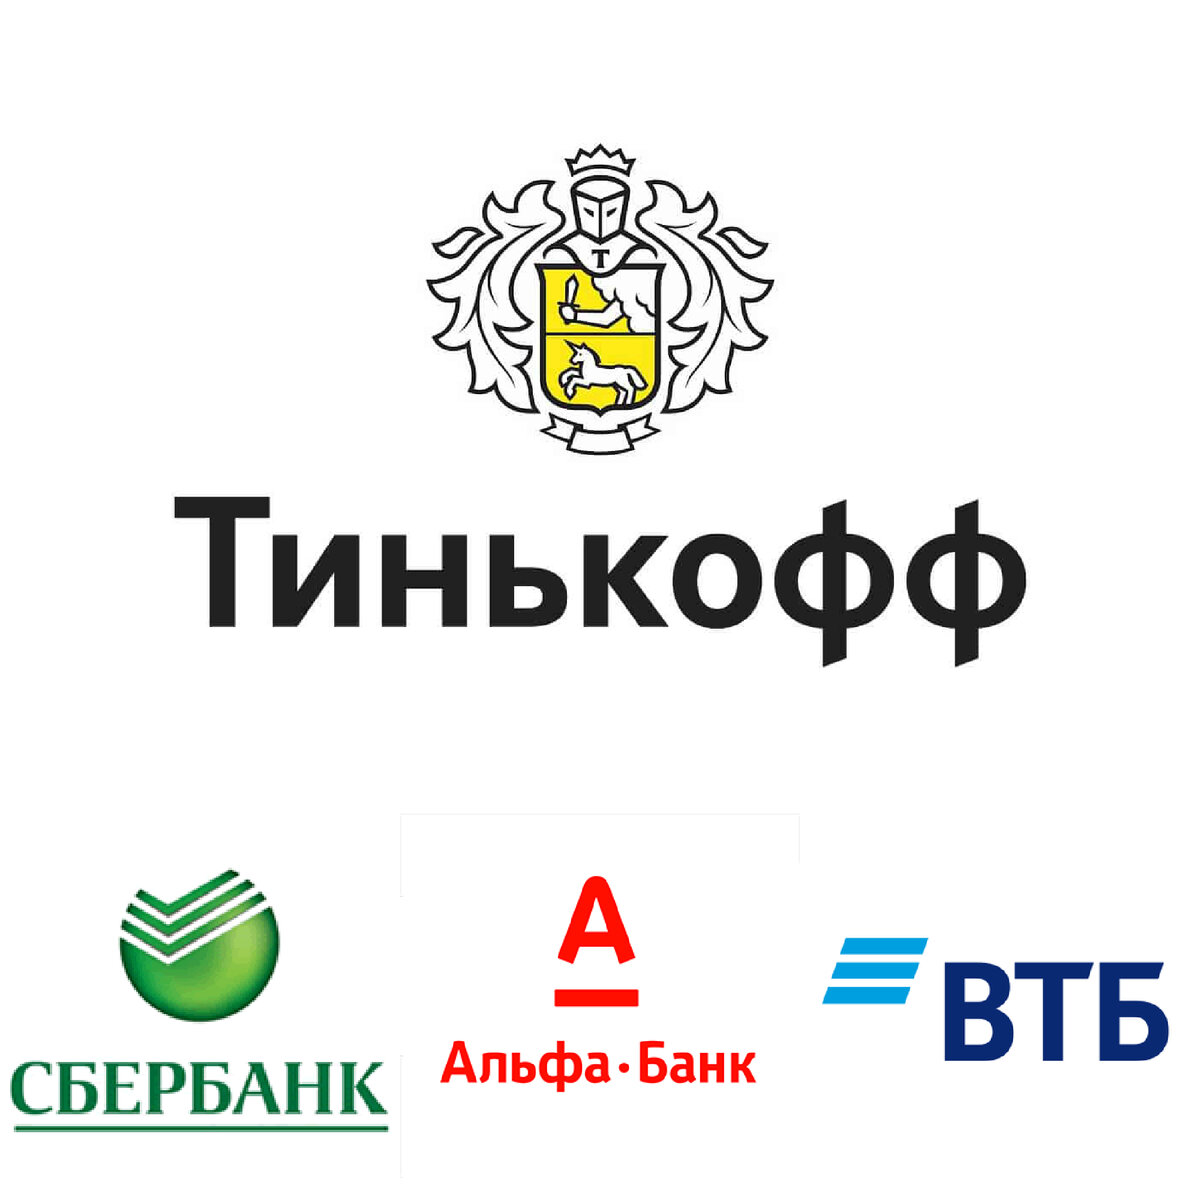 Банк новый логотип. Логотипы банков. Тинькофф банк. Логотип тинькофф банка. Банк России логотип.